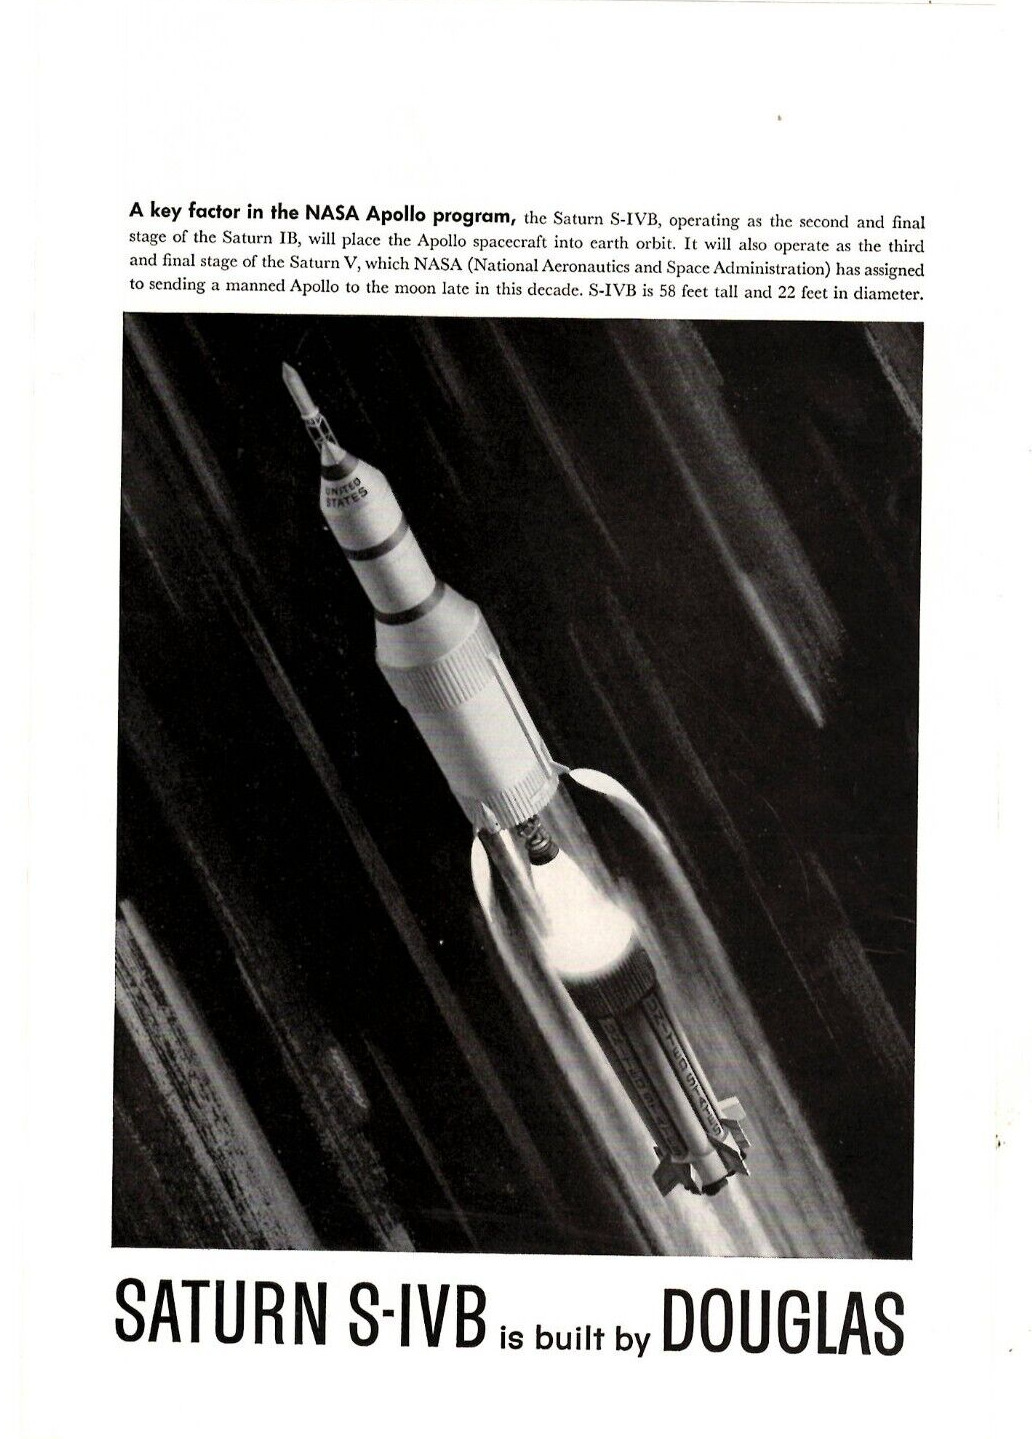 1963 Print Ad Douglas Saturn S-IVB A key factor in the NASA Apollo Program Illus